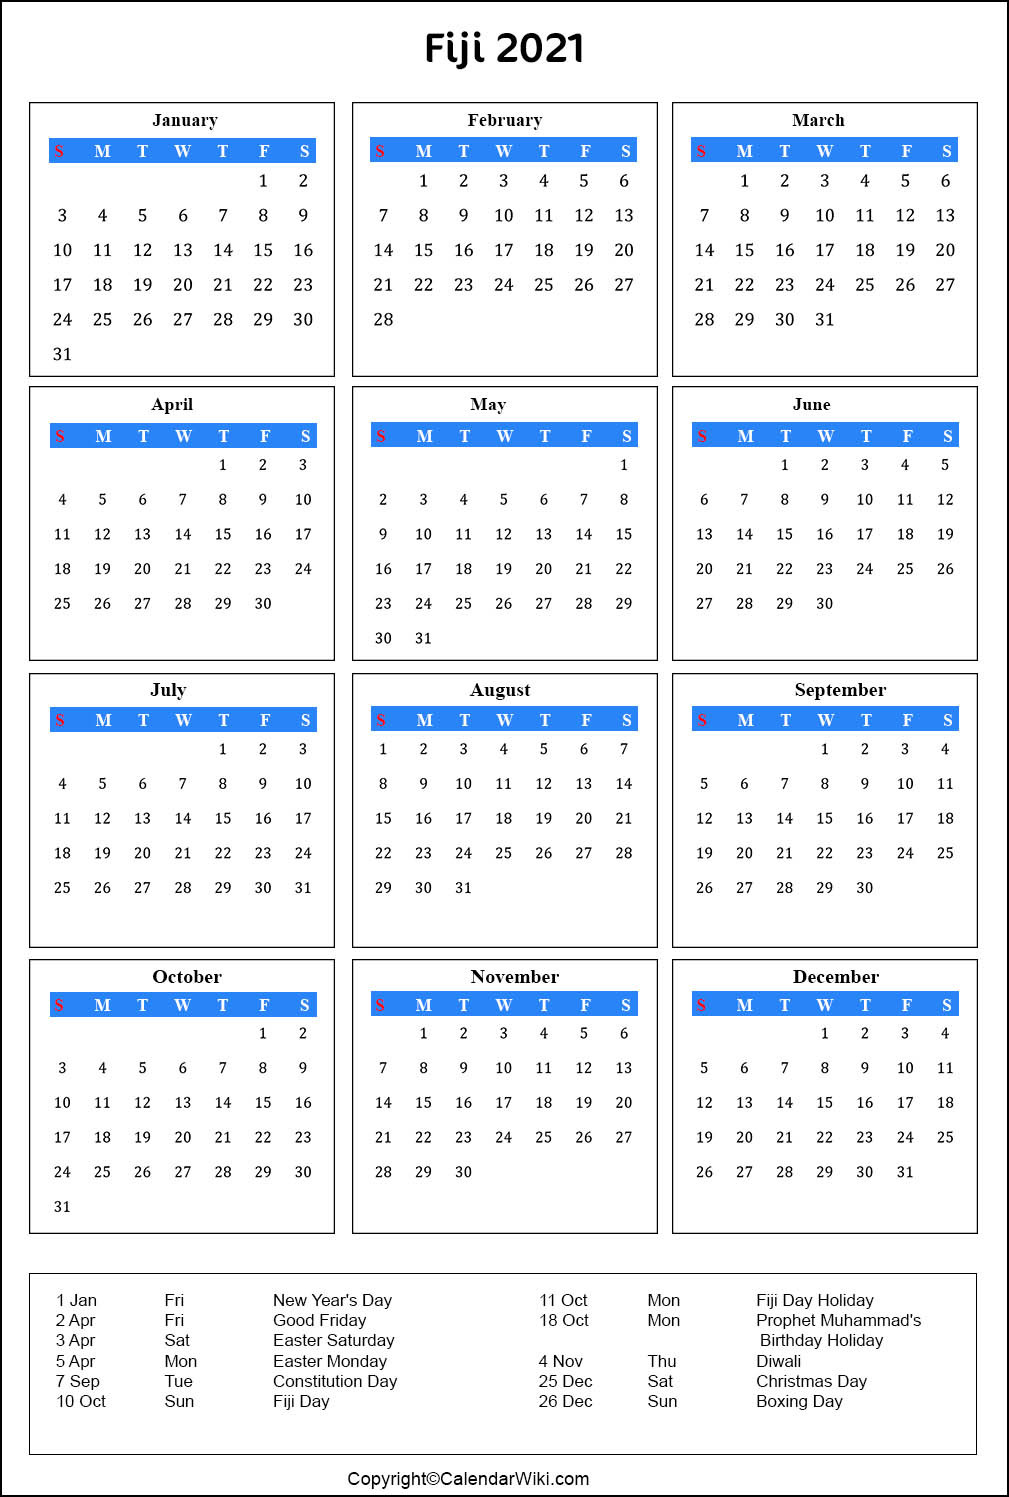 Printable Fiji Calendar 2021 With Holidays [Public Holidays]-Download 2021 Calendar With School Terms And Public Holidays